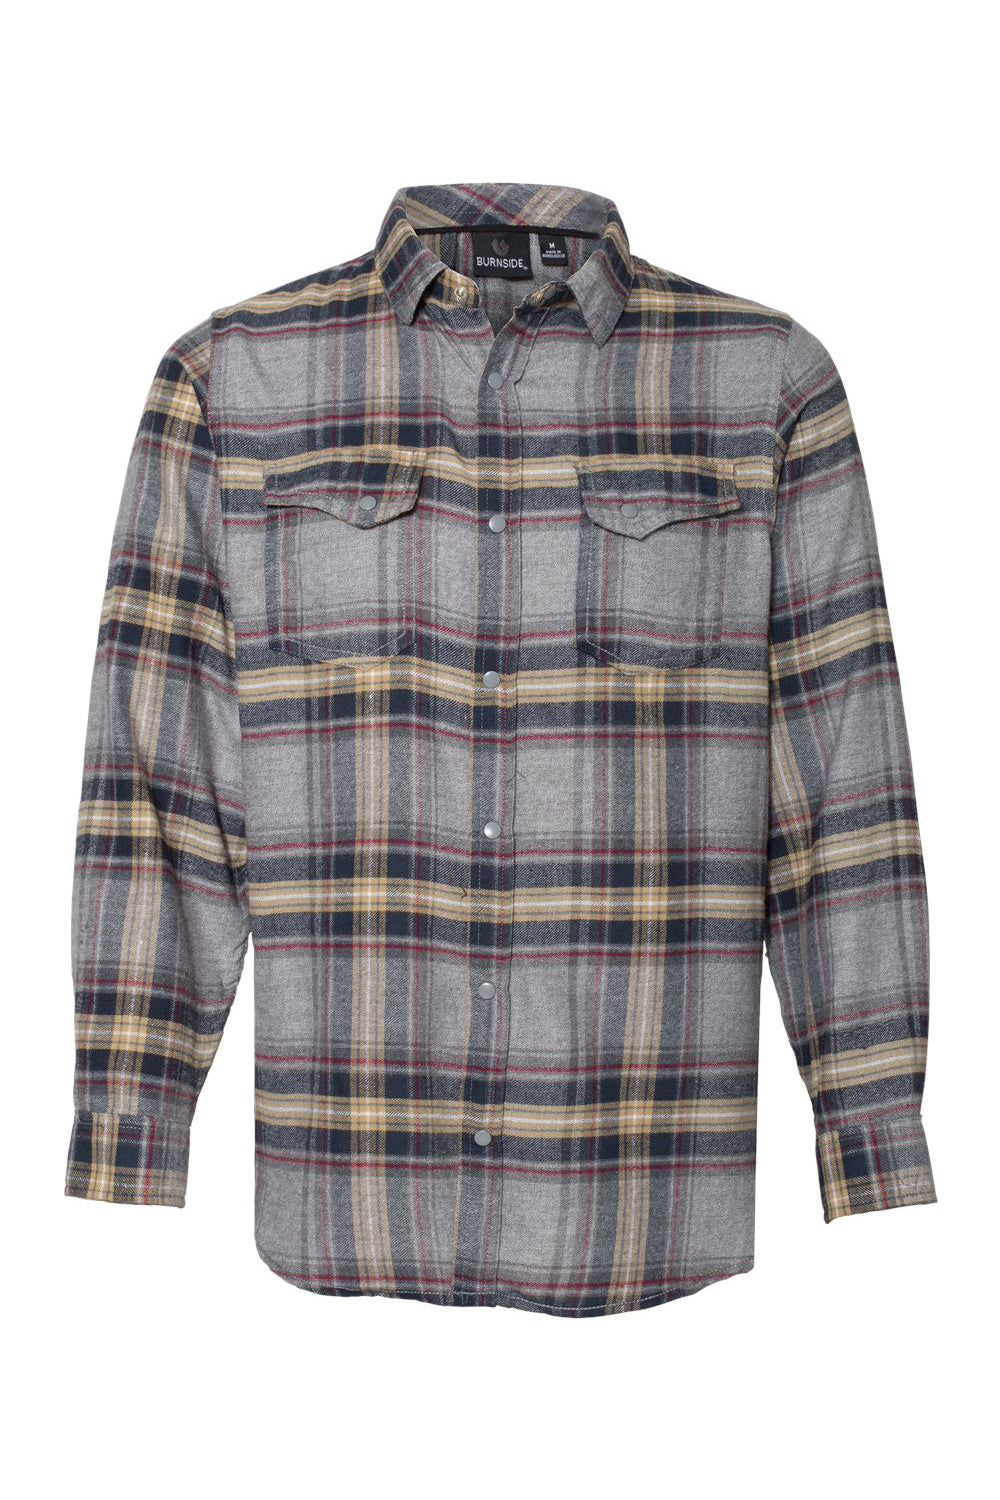 Burnside 8219 Mens Plaid Flannel Long Sleeve Snap Down Shirt w/ Double Pockets Light Grey Flat Front